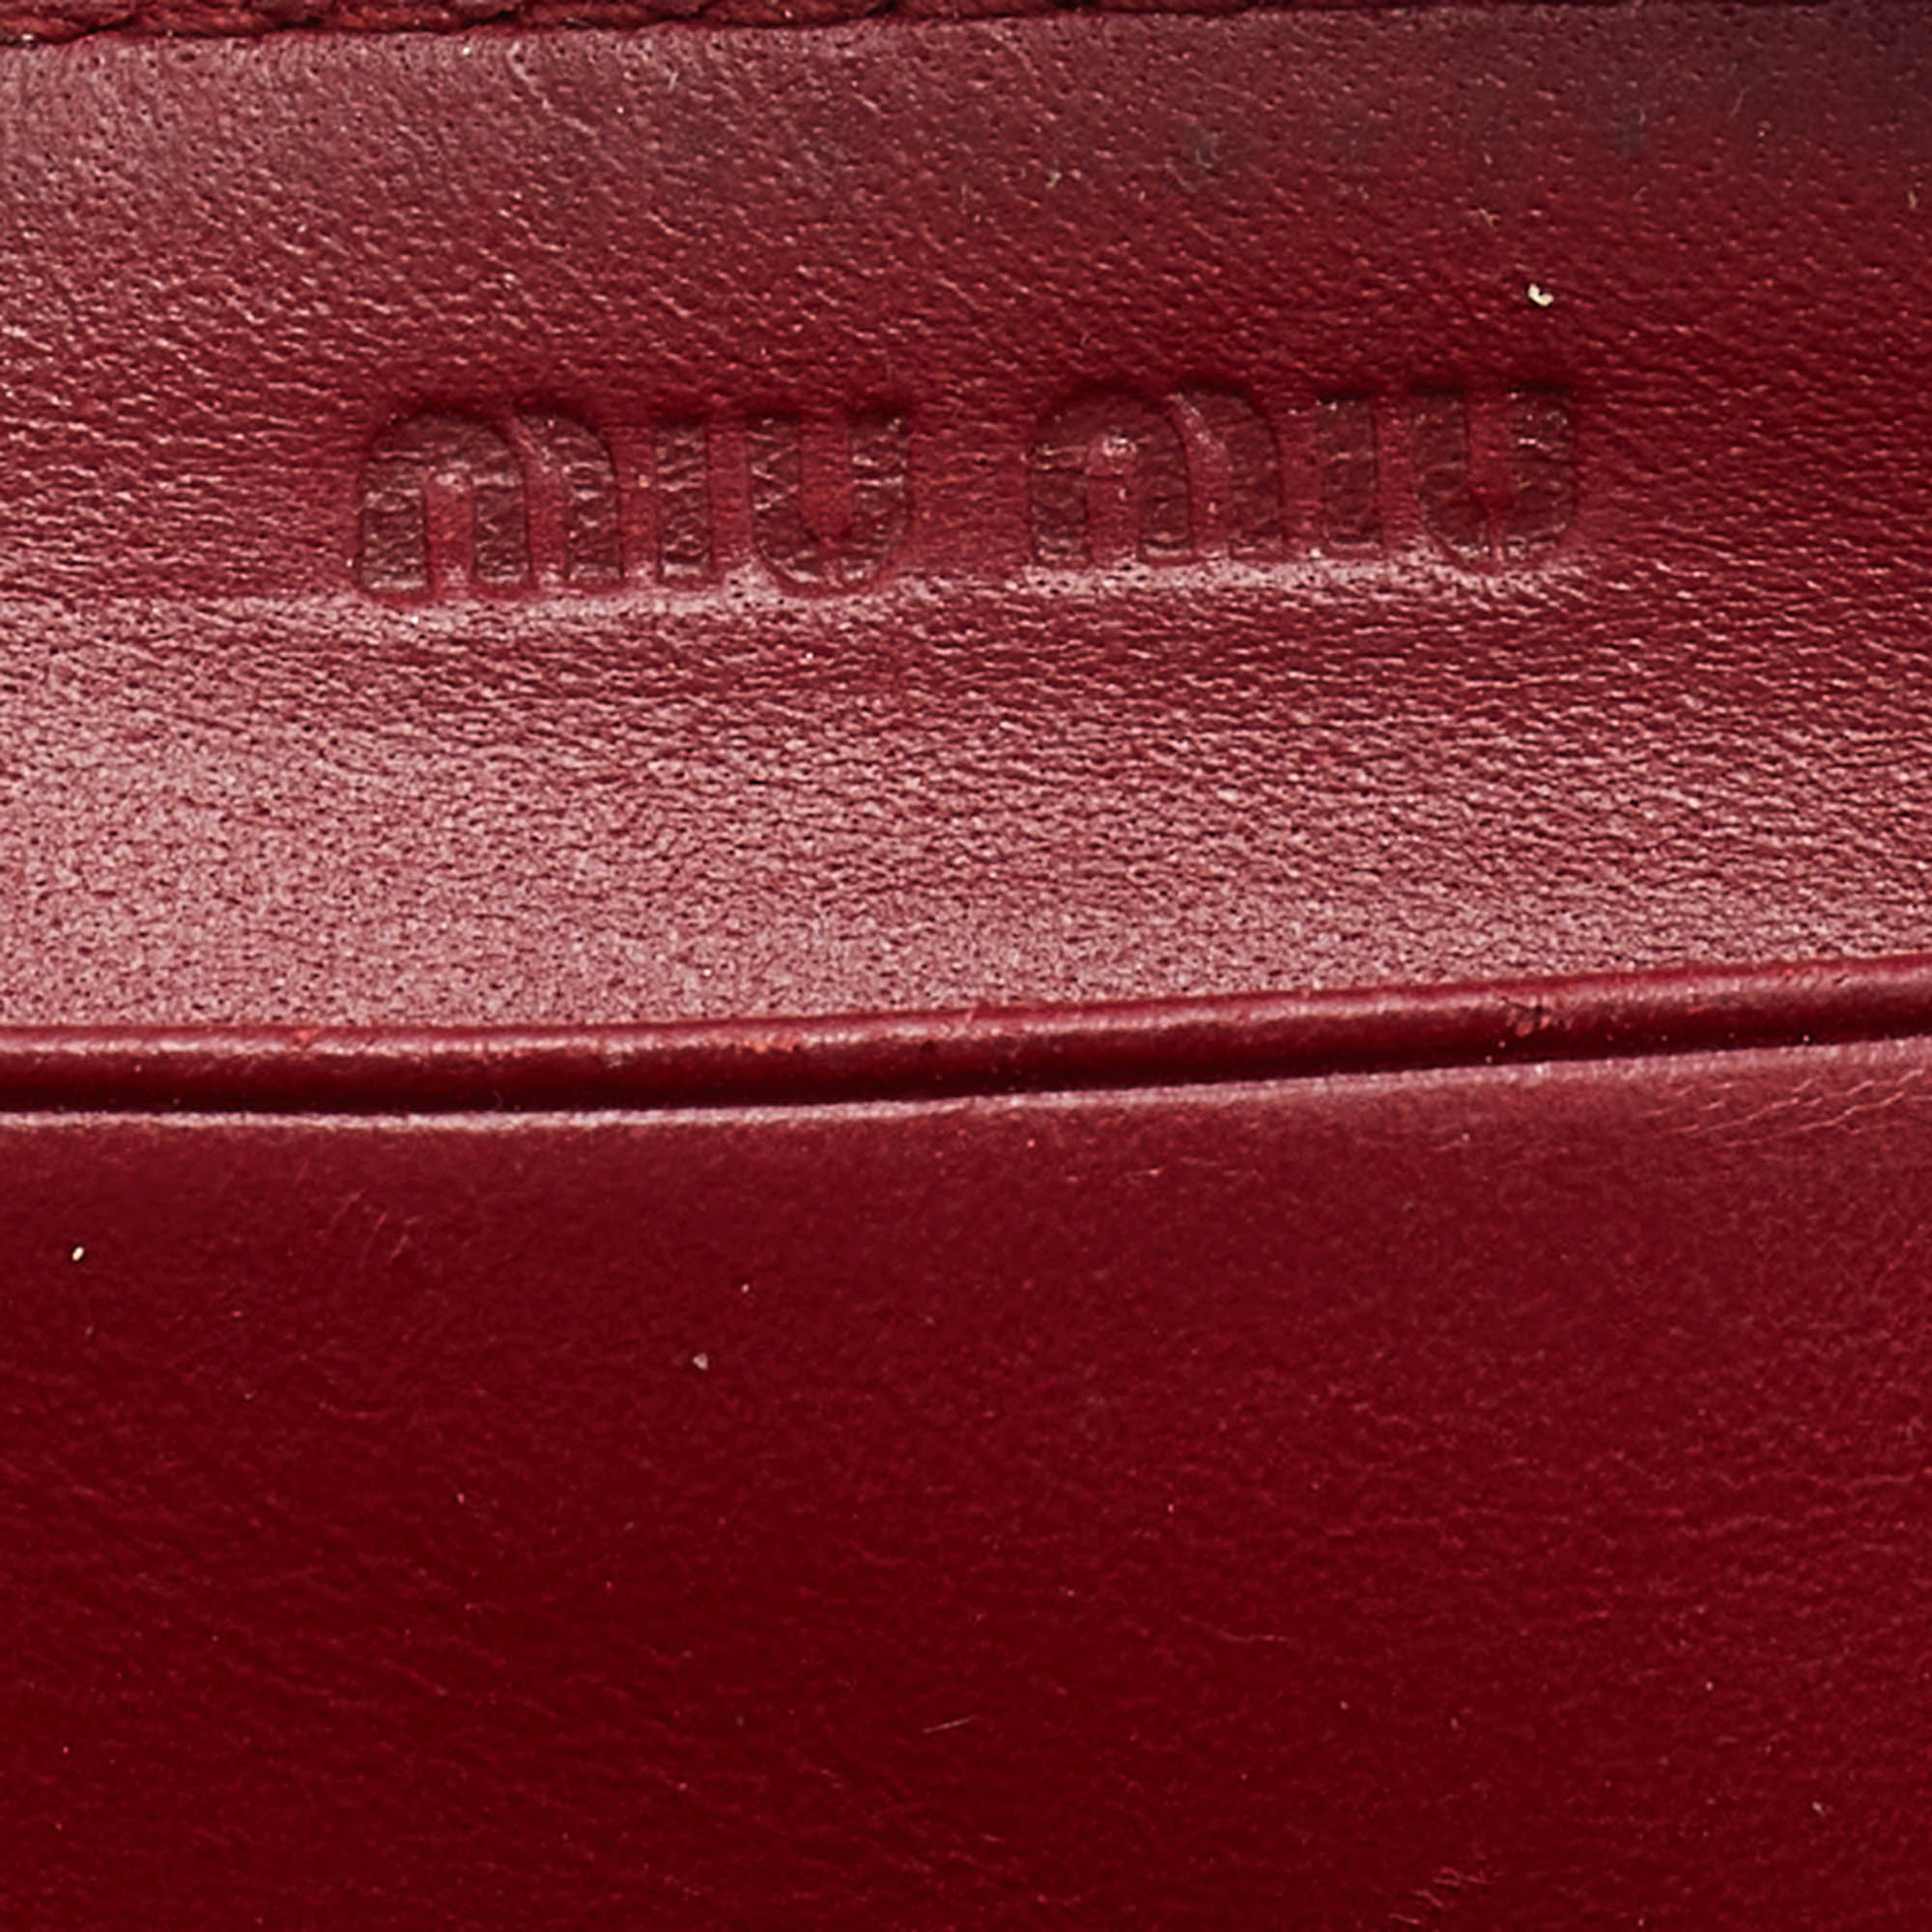 Miu Miu Red Croc Embossed Leather Compact Zip Around Wallet